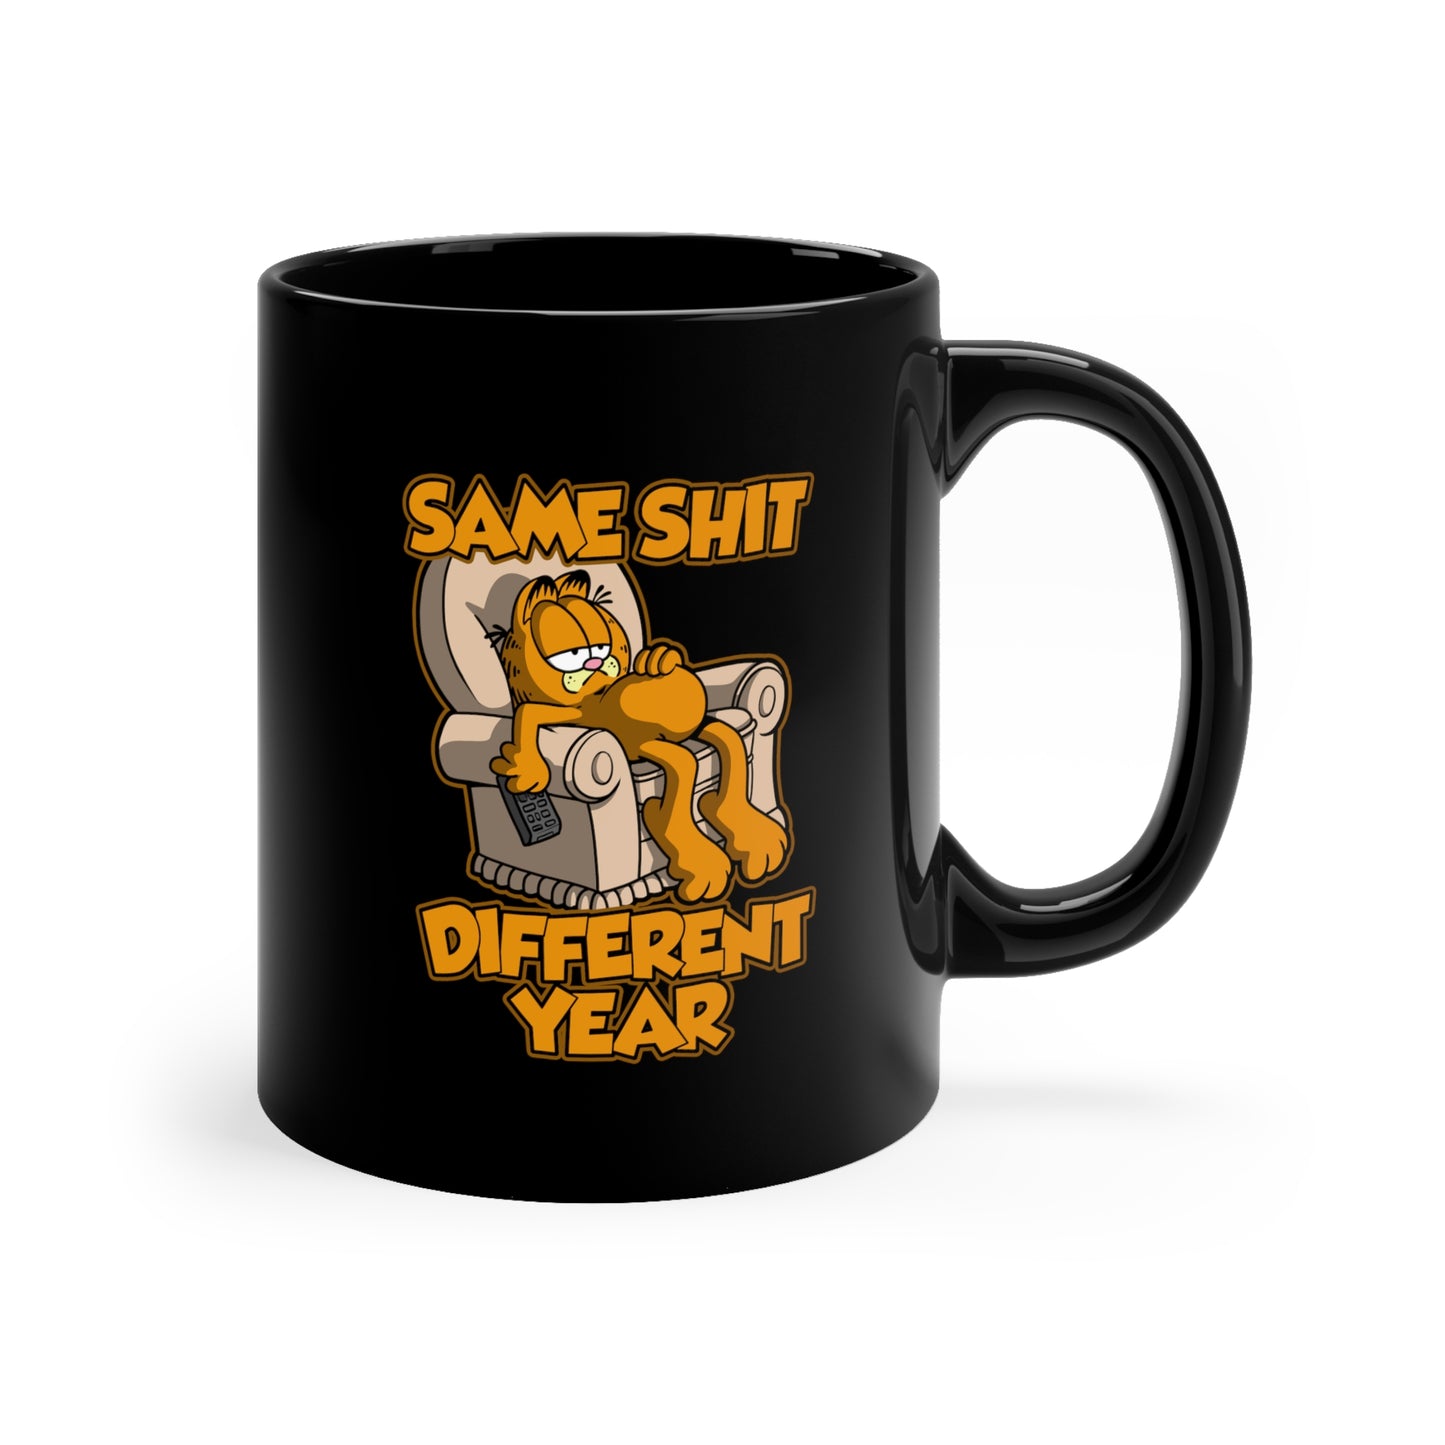 Same Cat, Different Year ceramic mug